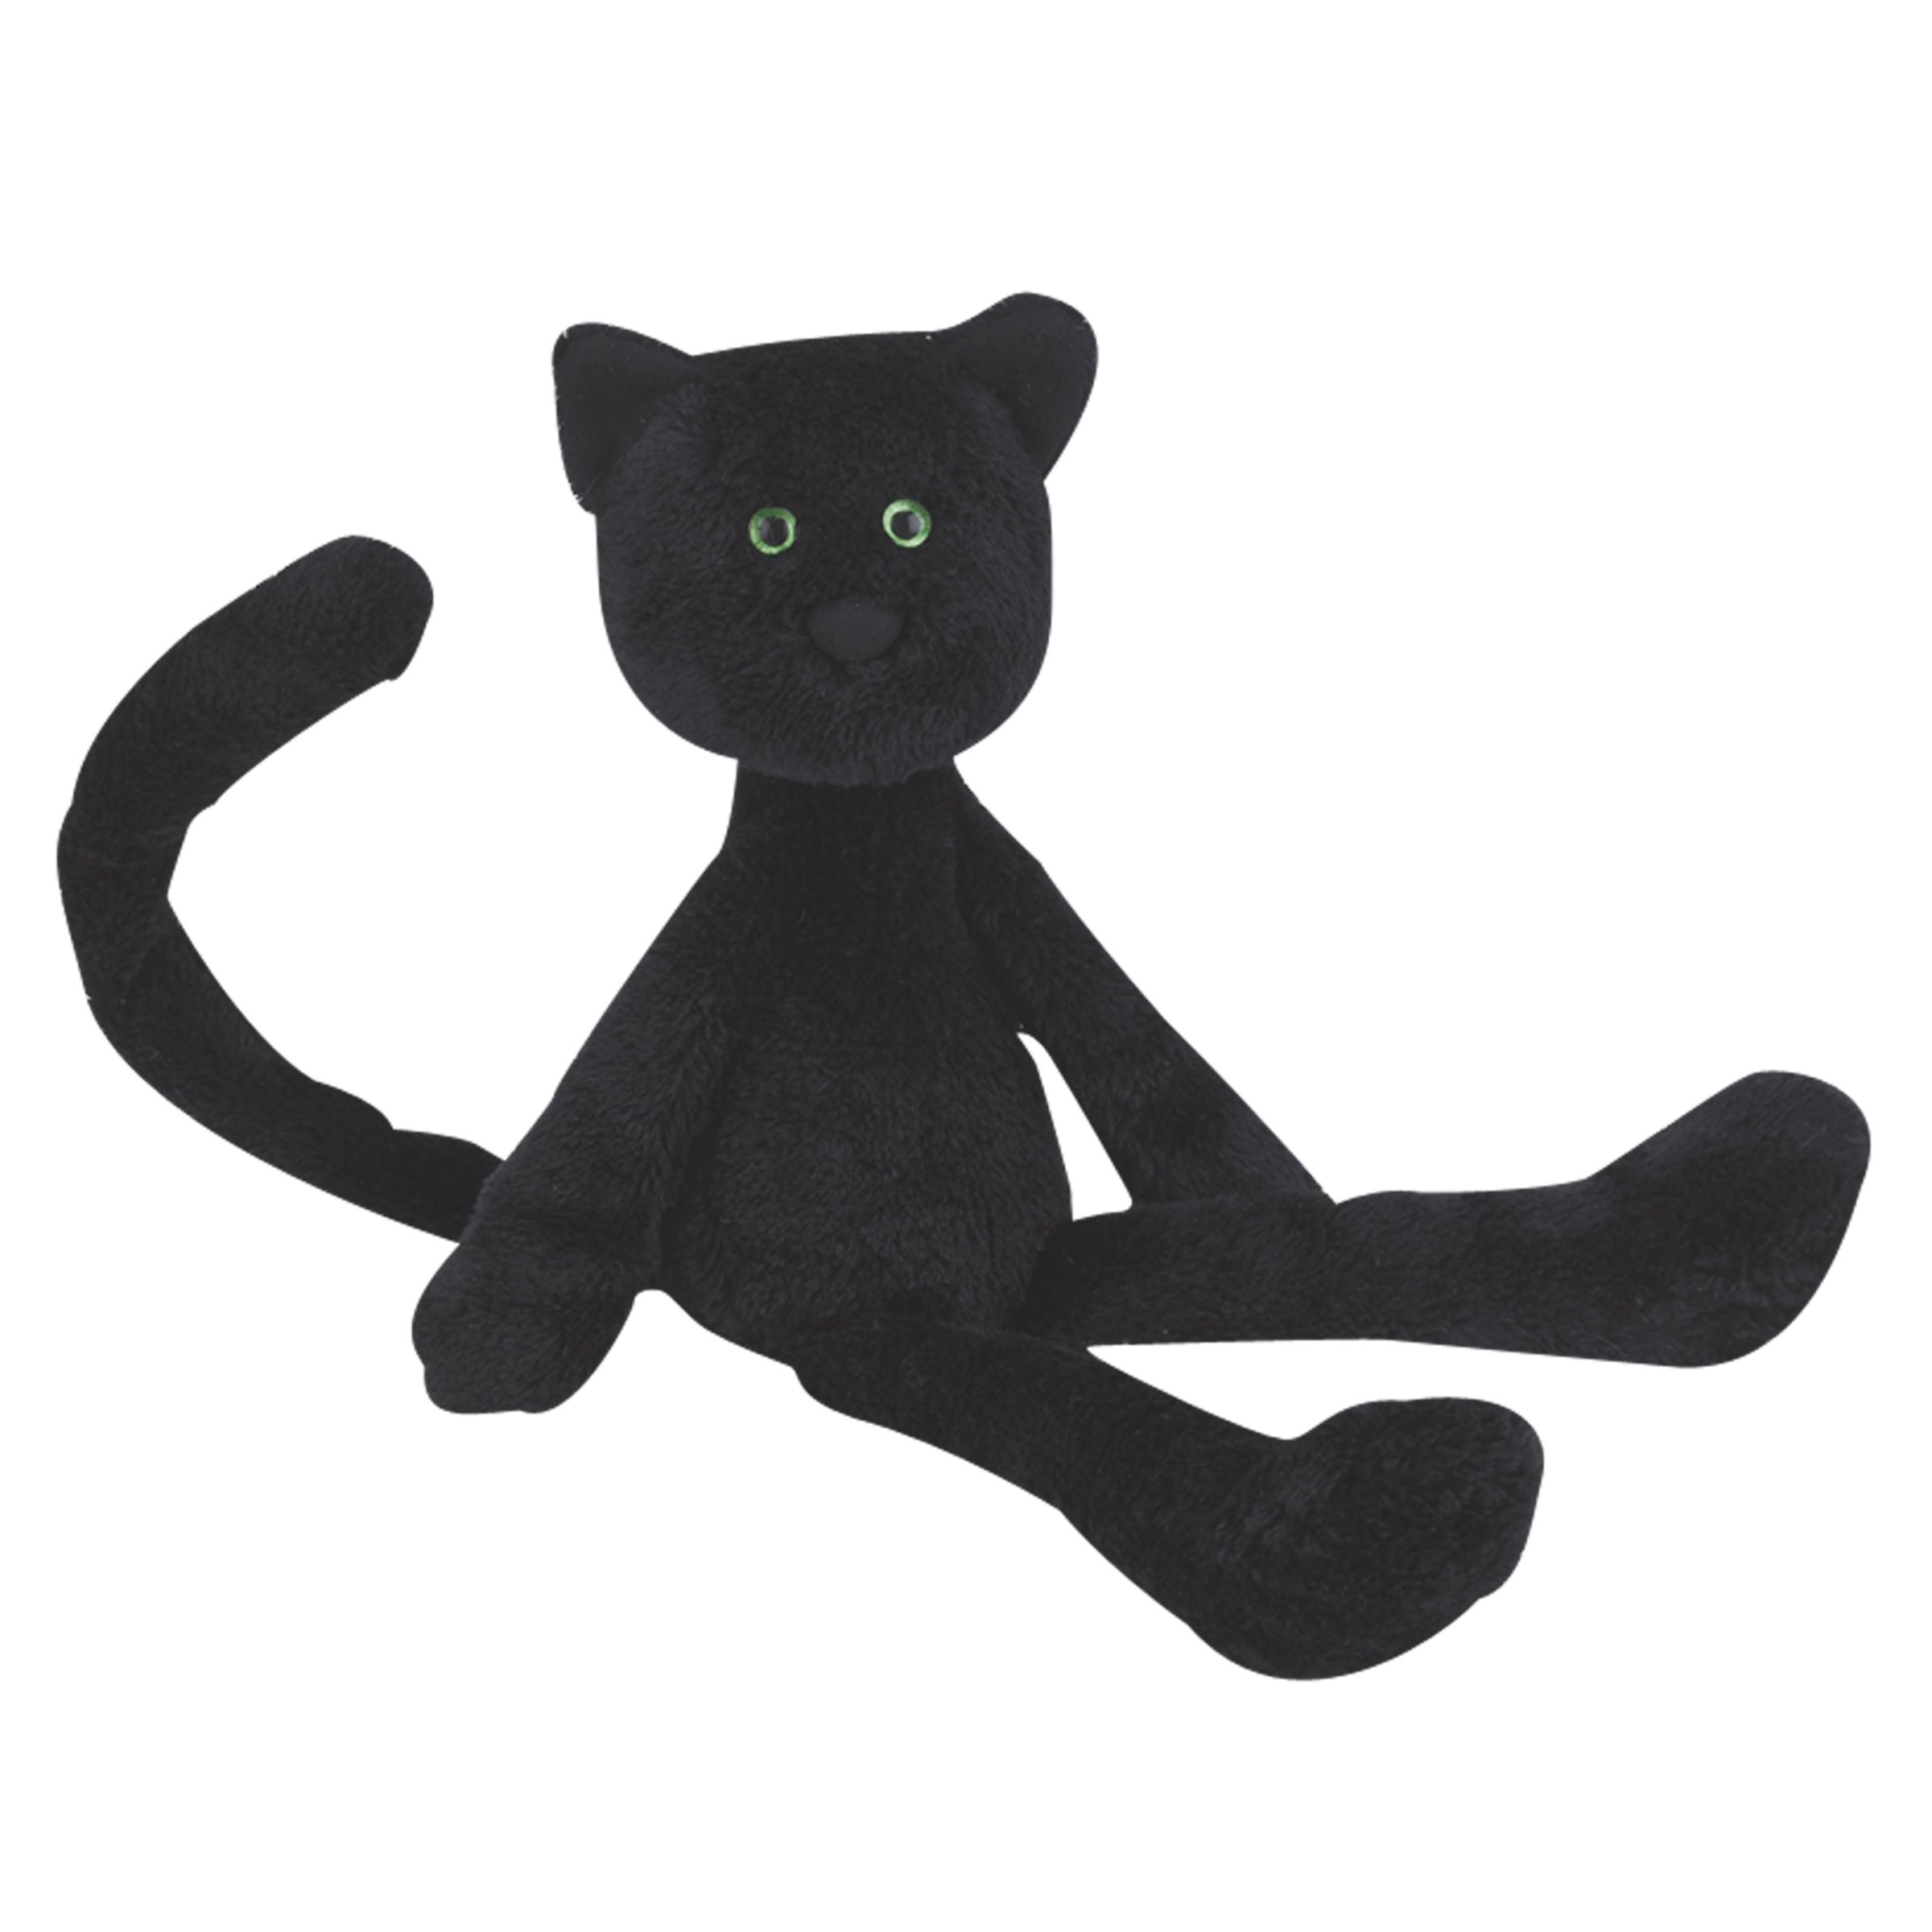 jellycat cat toy